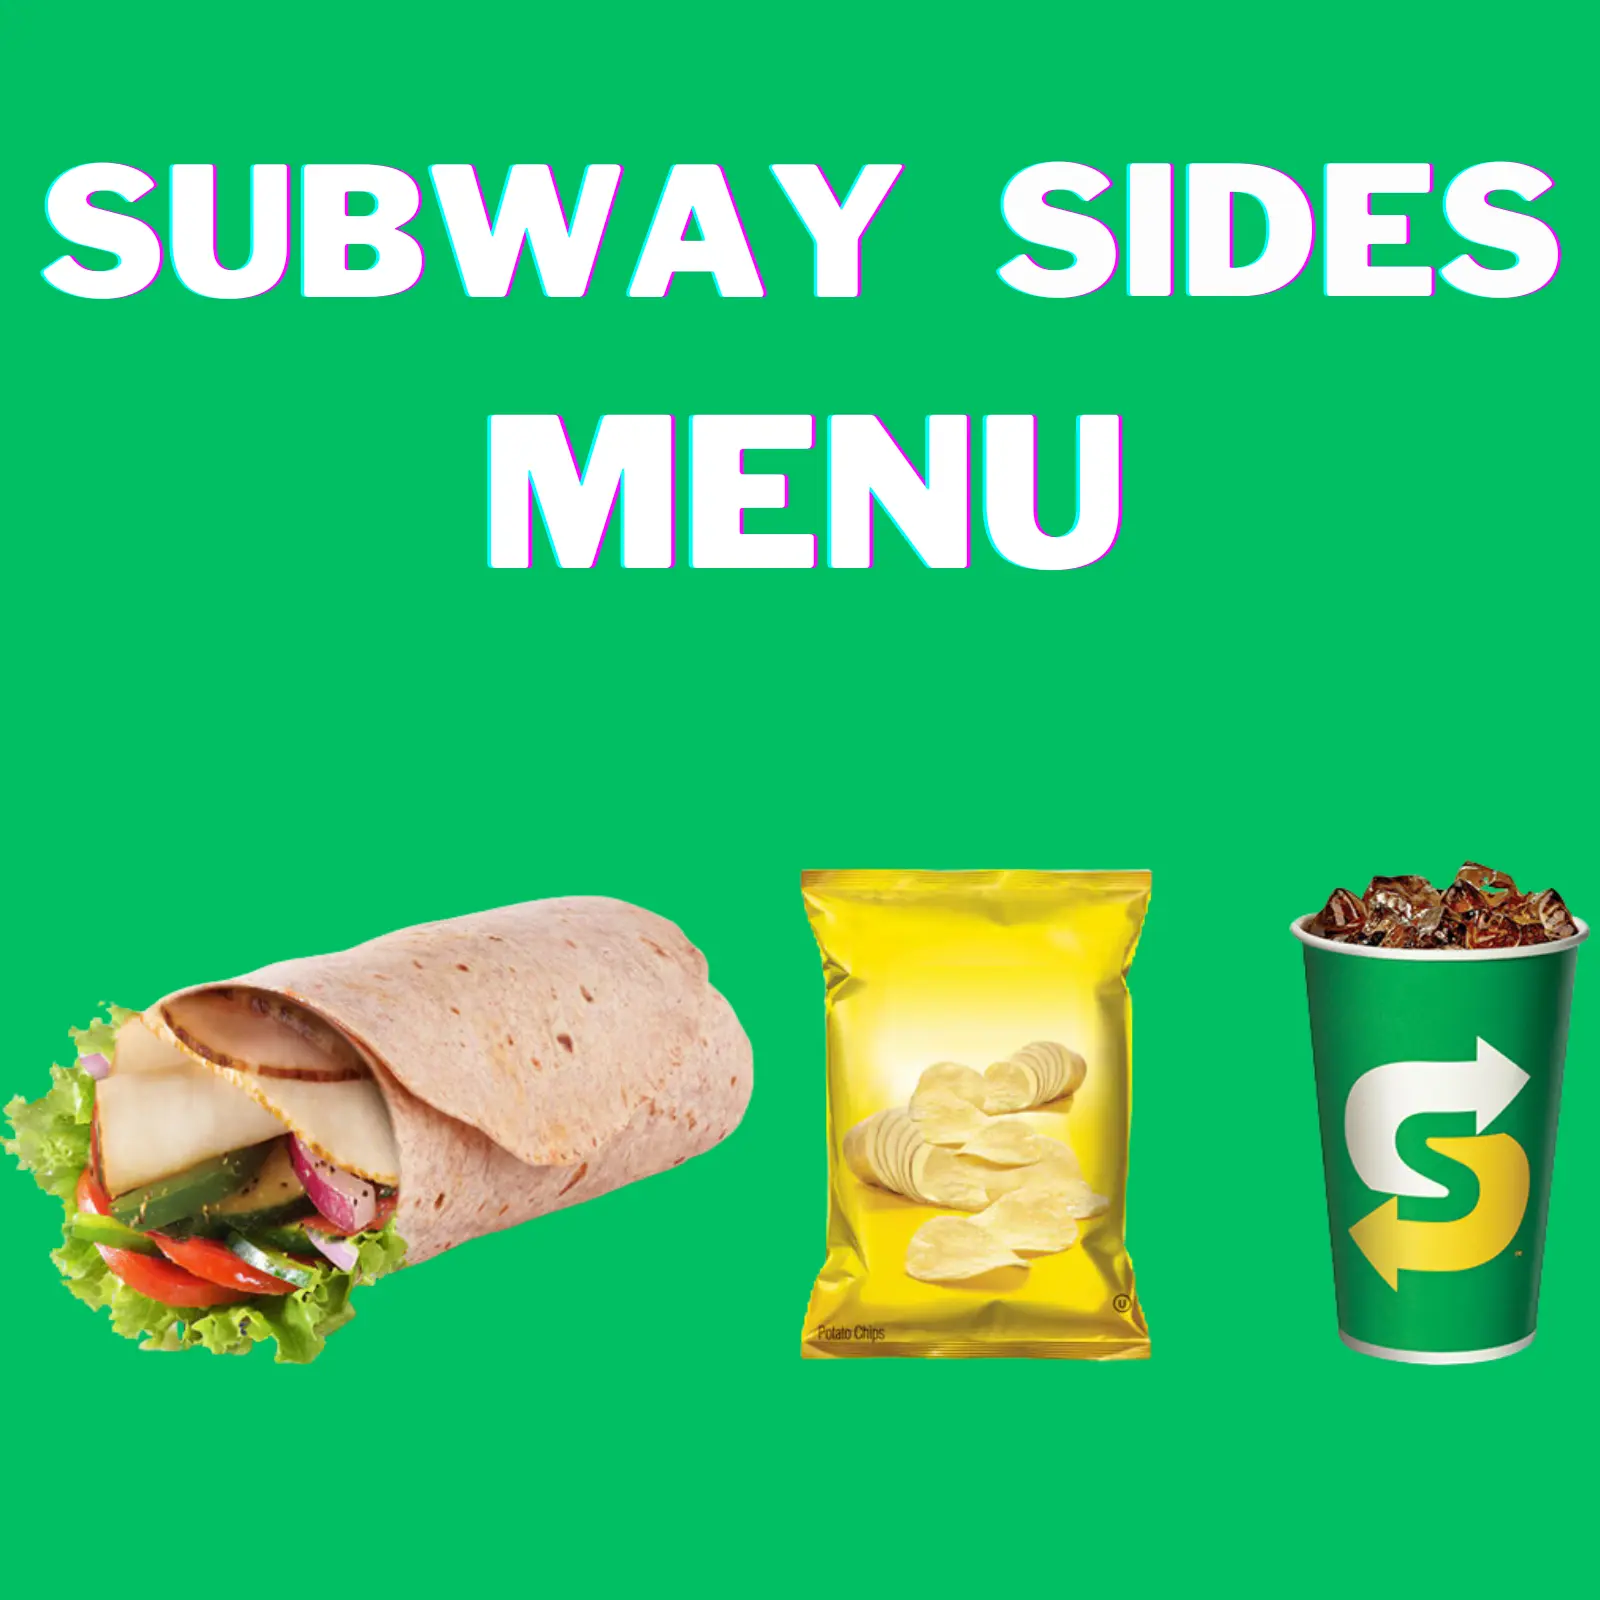 Subway sides menu